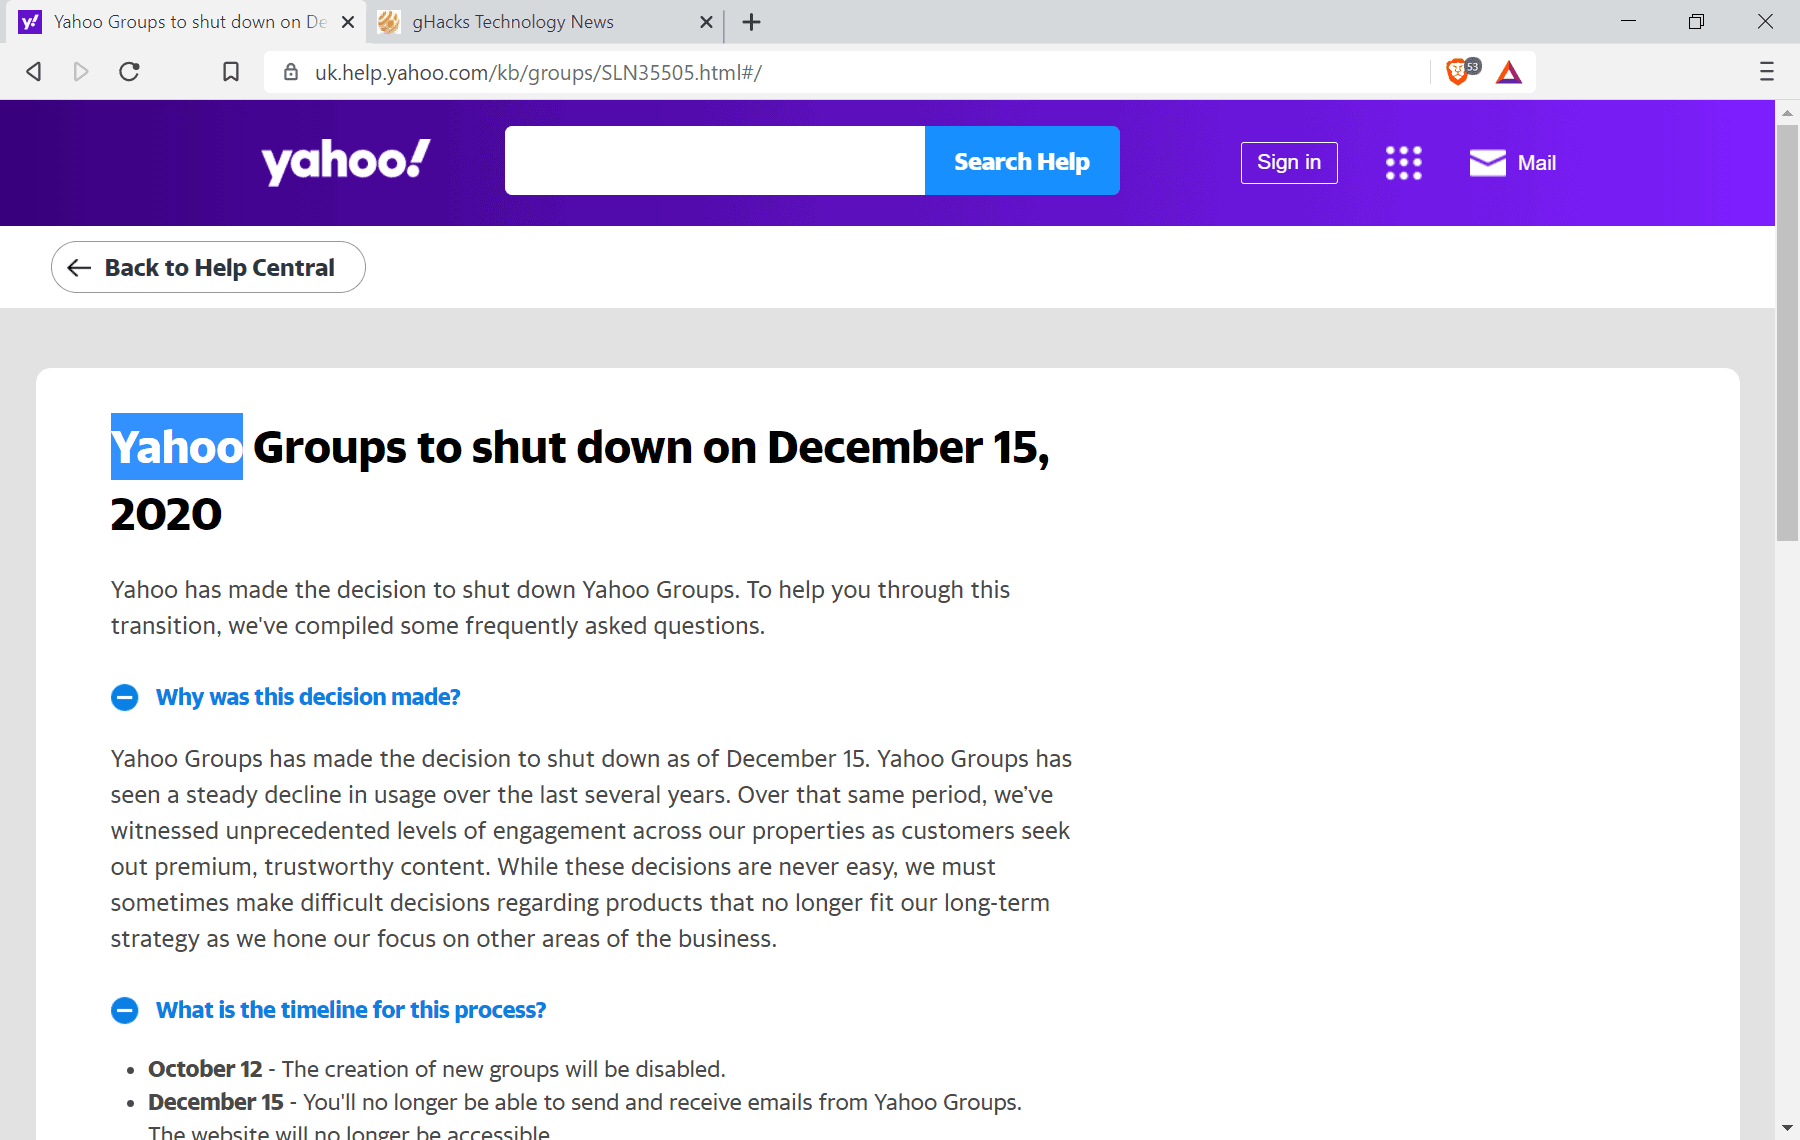 Farewell Yahoo Groups! Shutting down on December 15, 2020